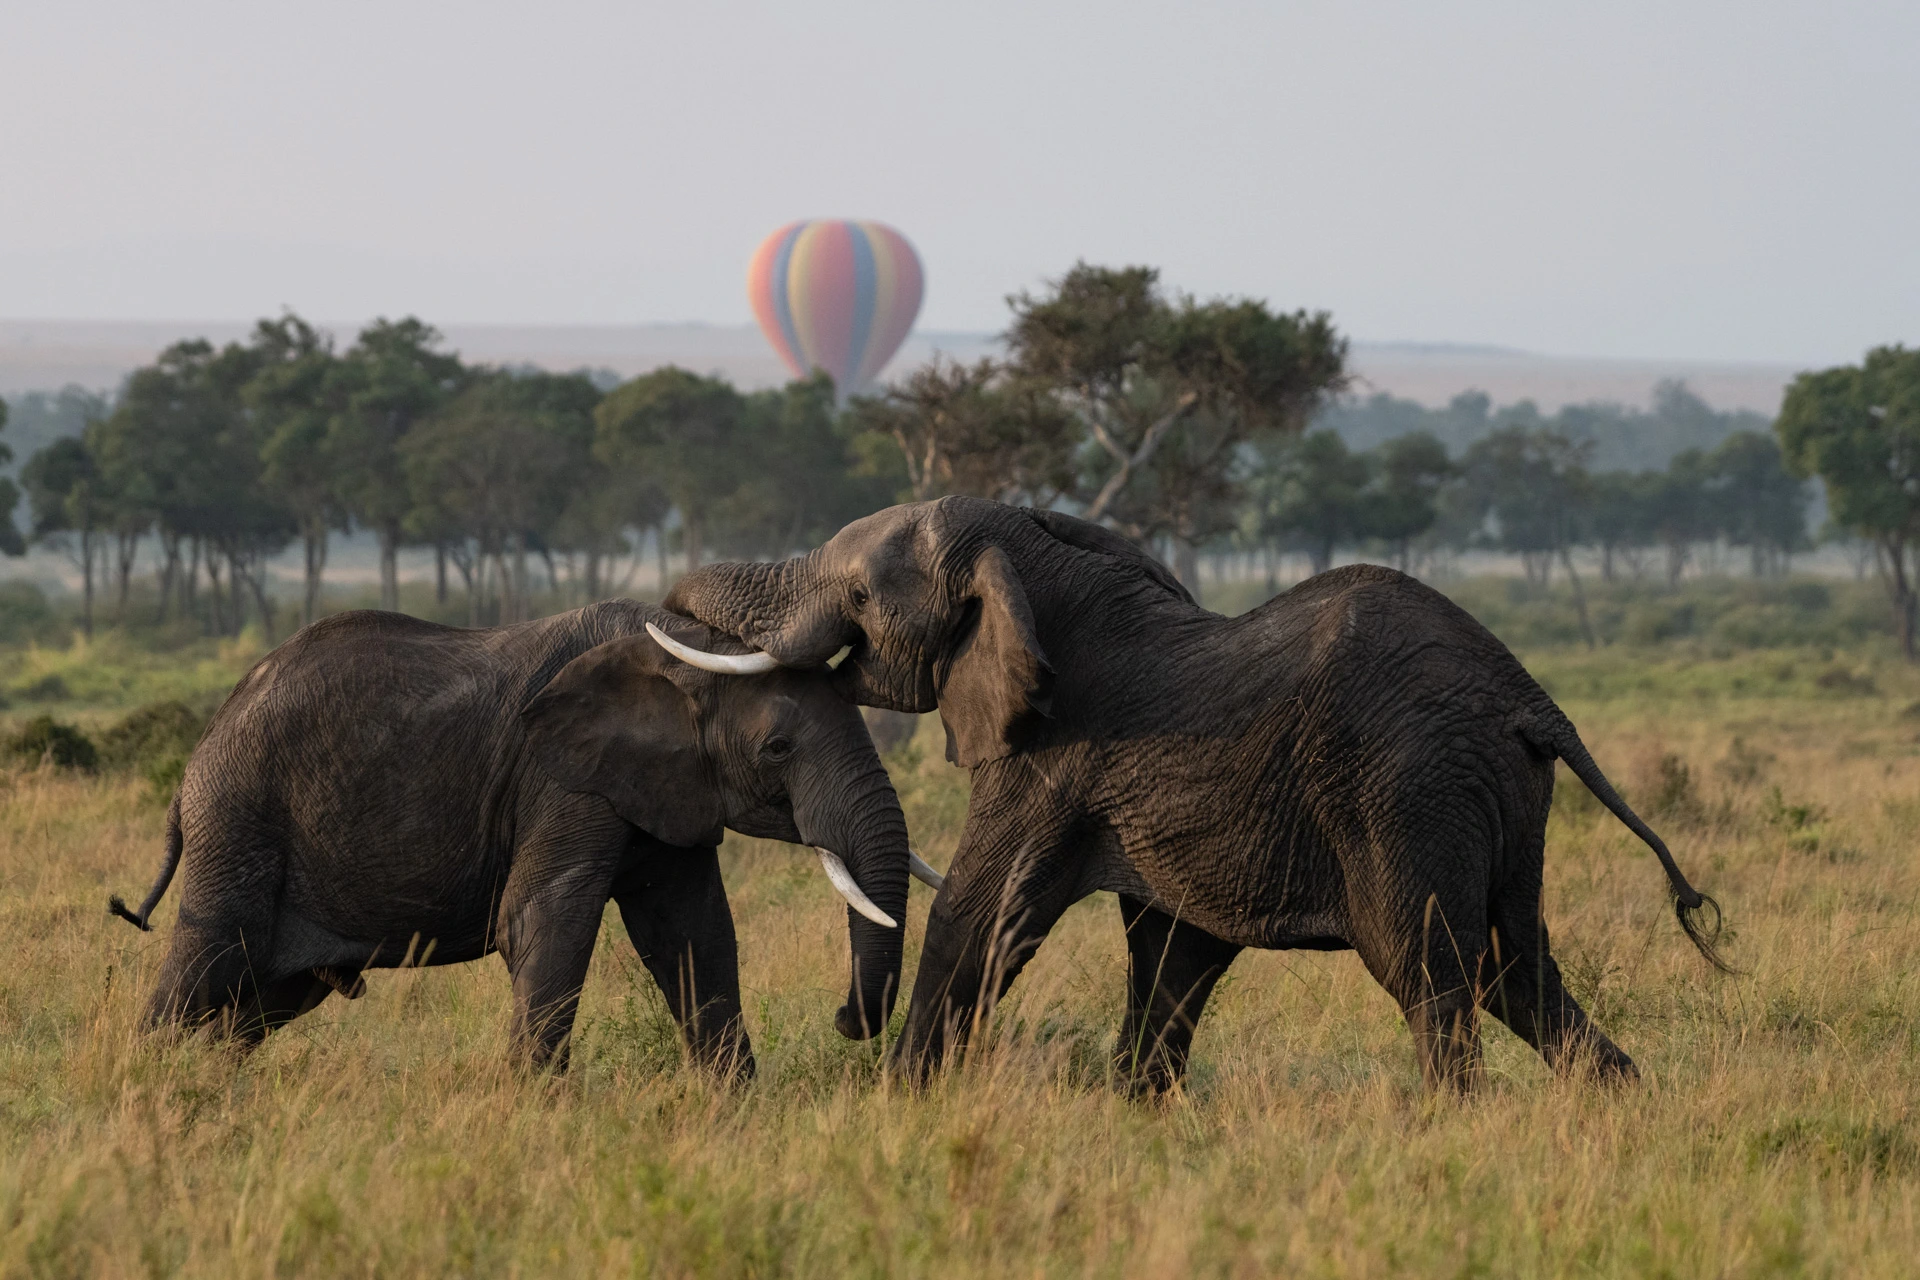 Honeymoon Safaris in Kenya - elephants in Masai Mara National Reserve